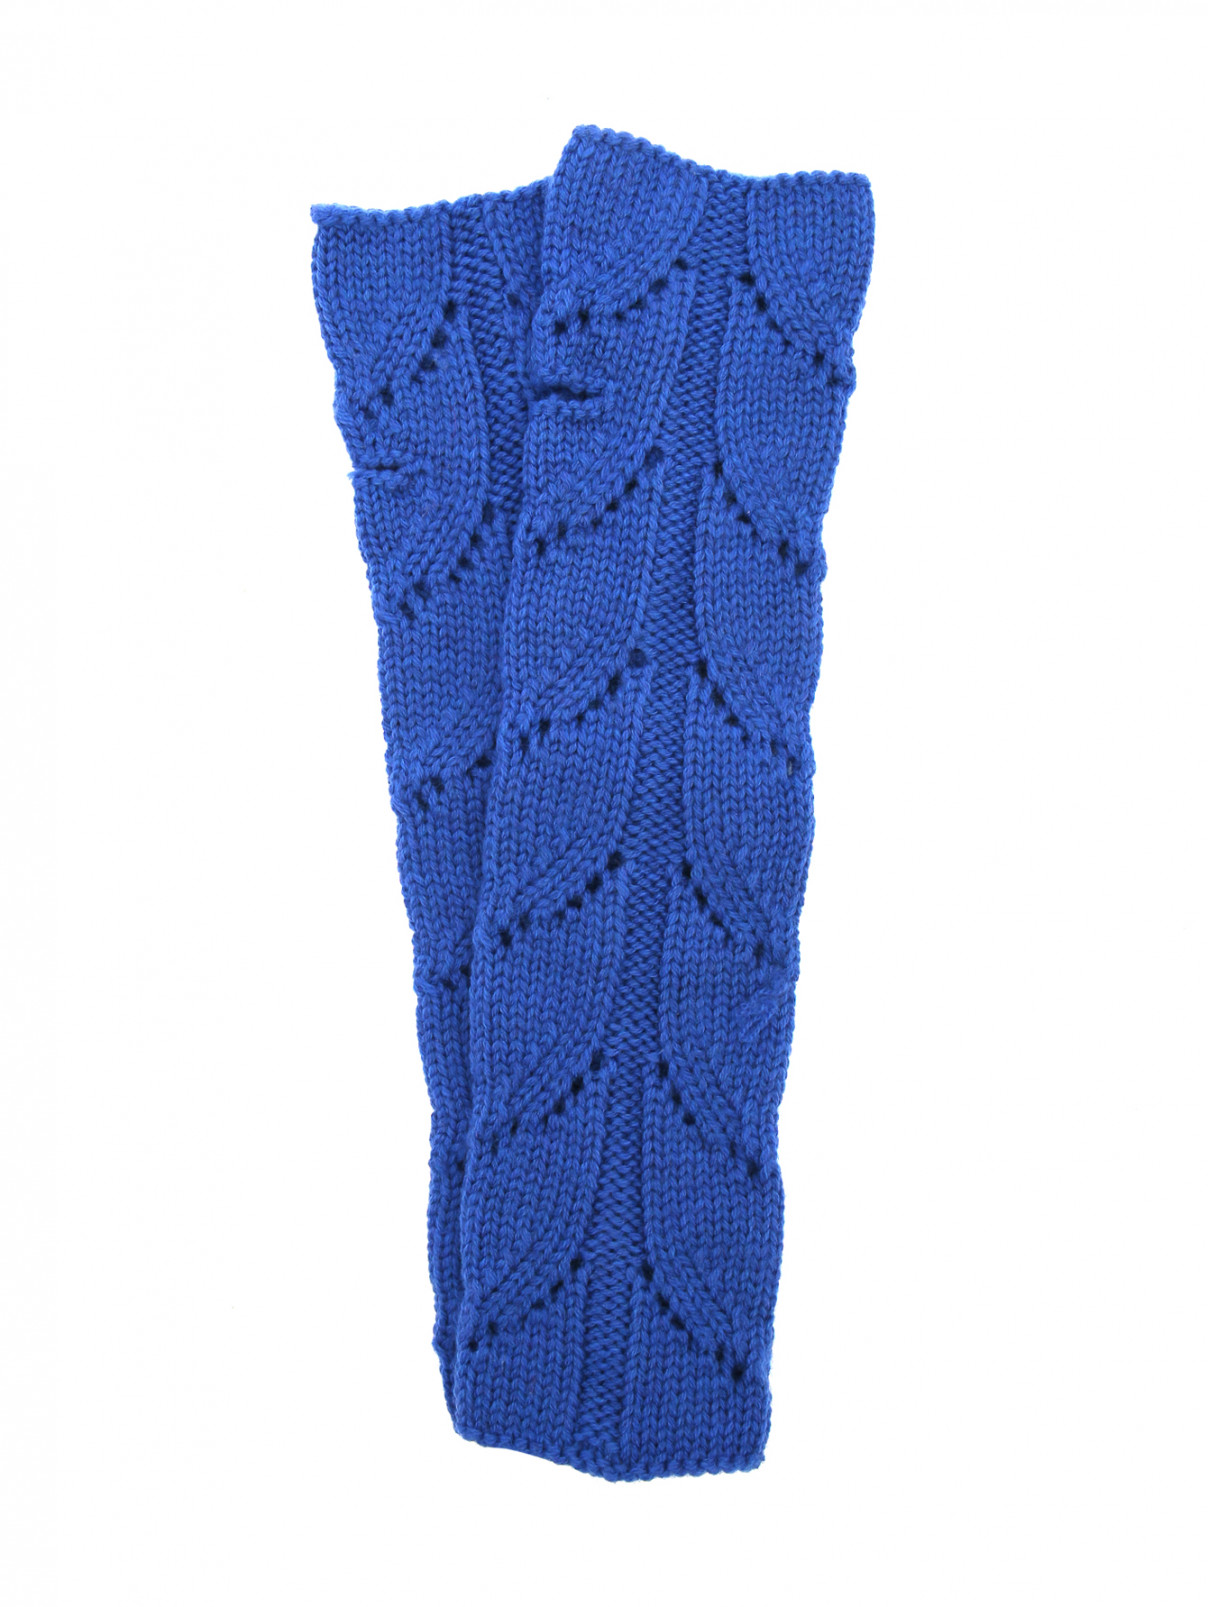 Перчатки-митенки из шерсти MiMiSol  –  Общий вид  – Цвет:  Синий